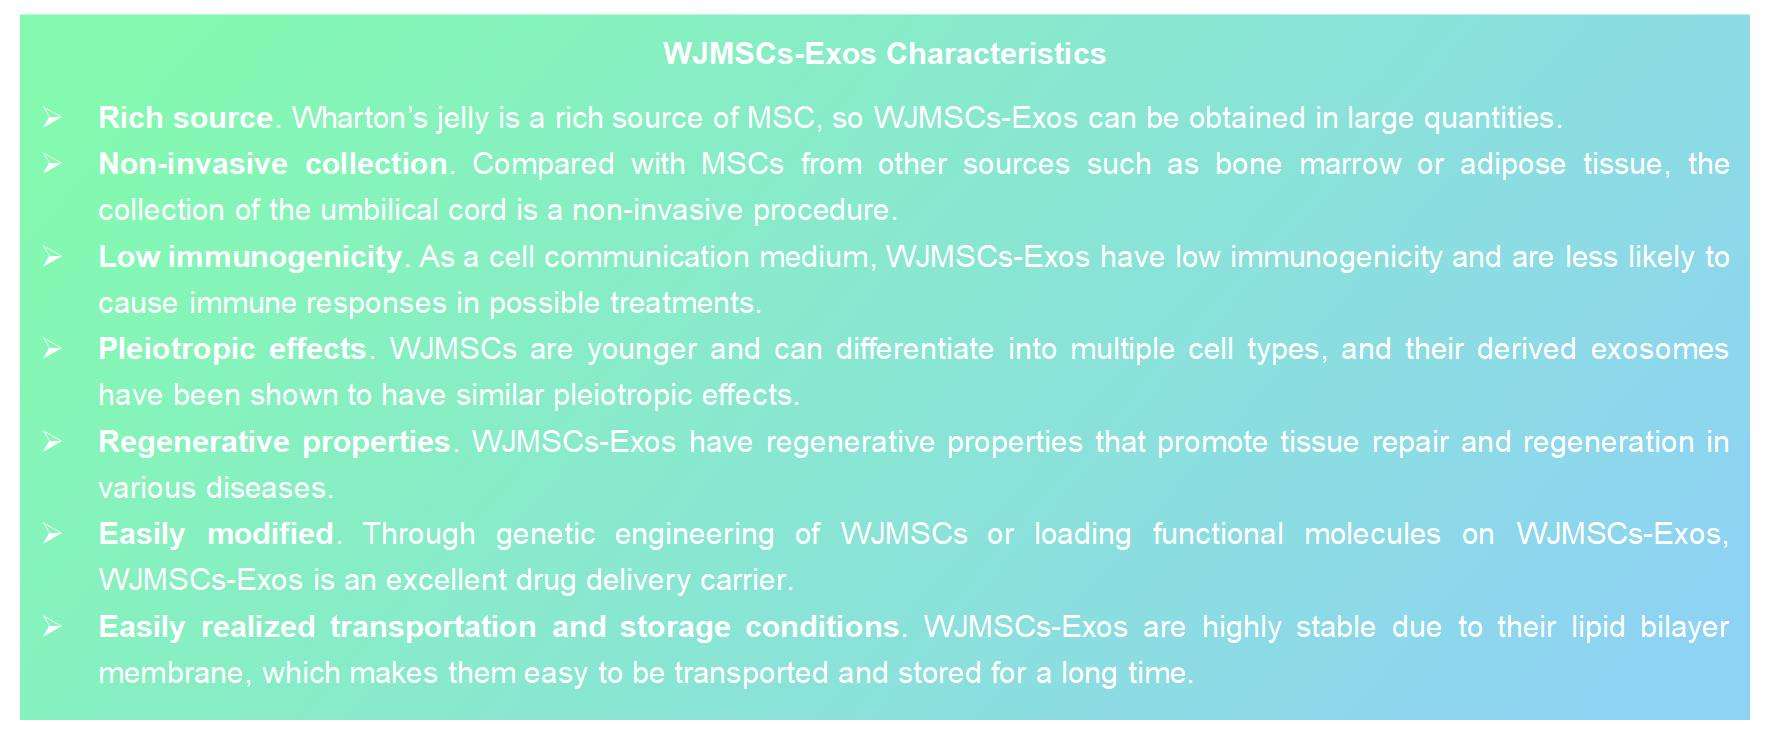 Why Develop Exosomes from Wharton's Jelly Mesenchymal Stem Cells (WJMSCs-Exos)